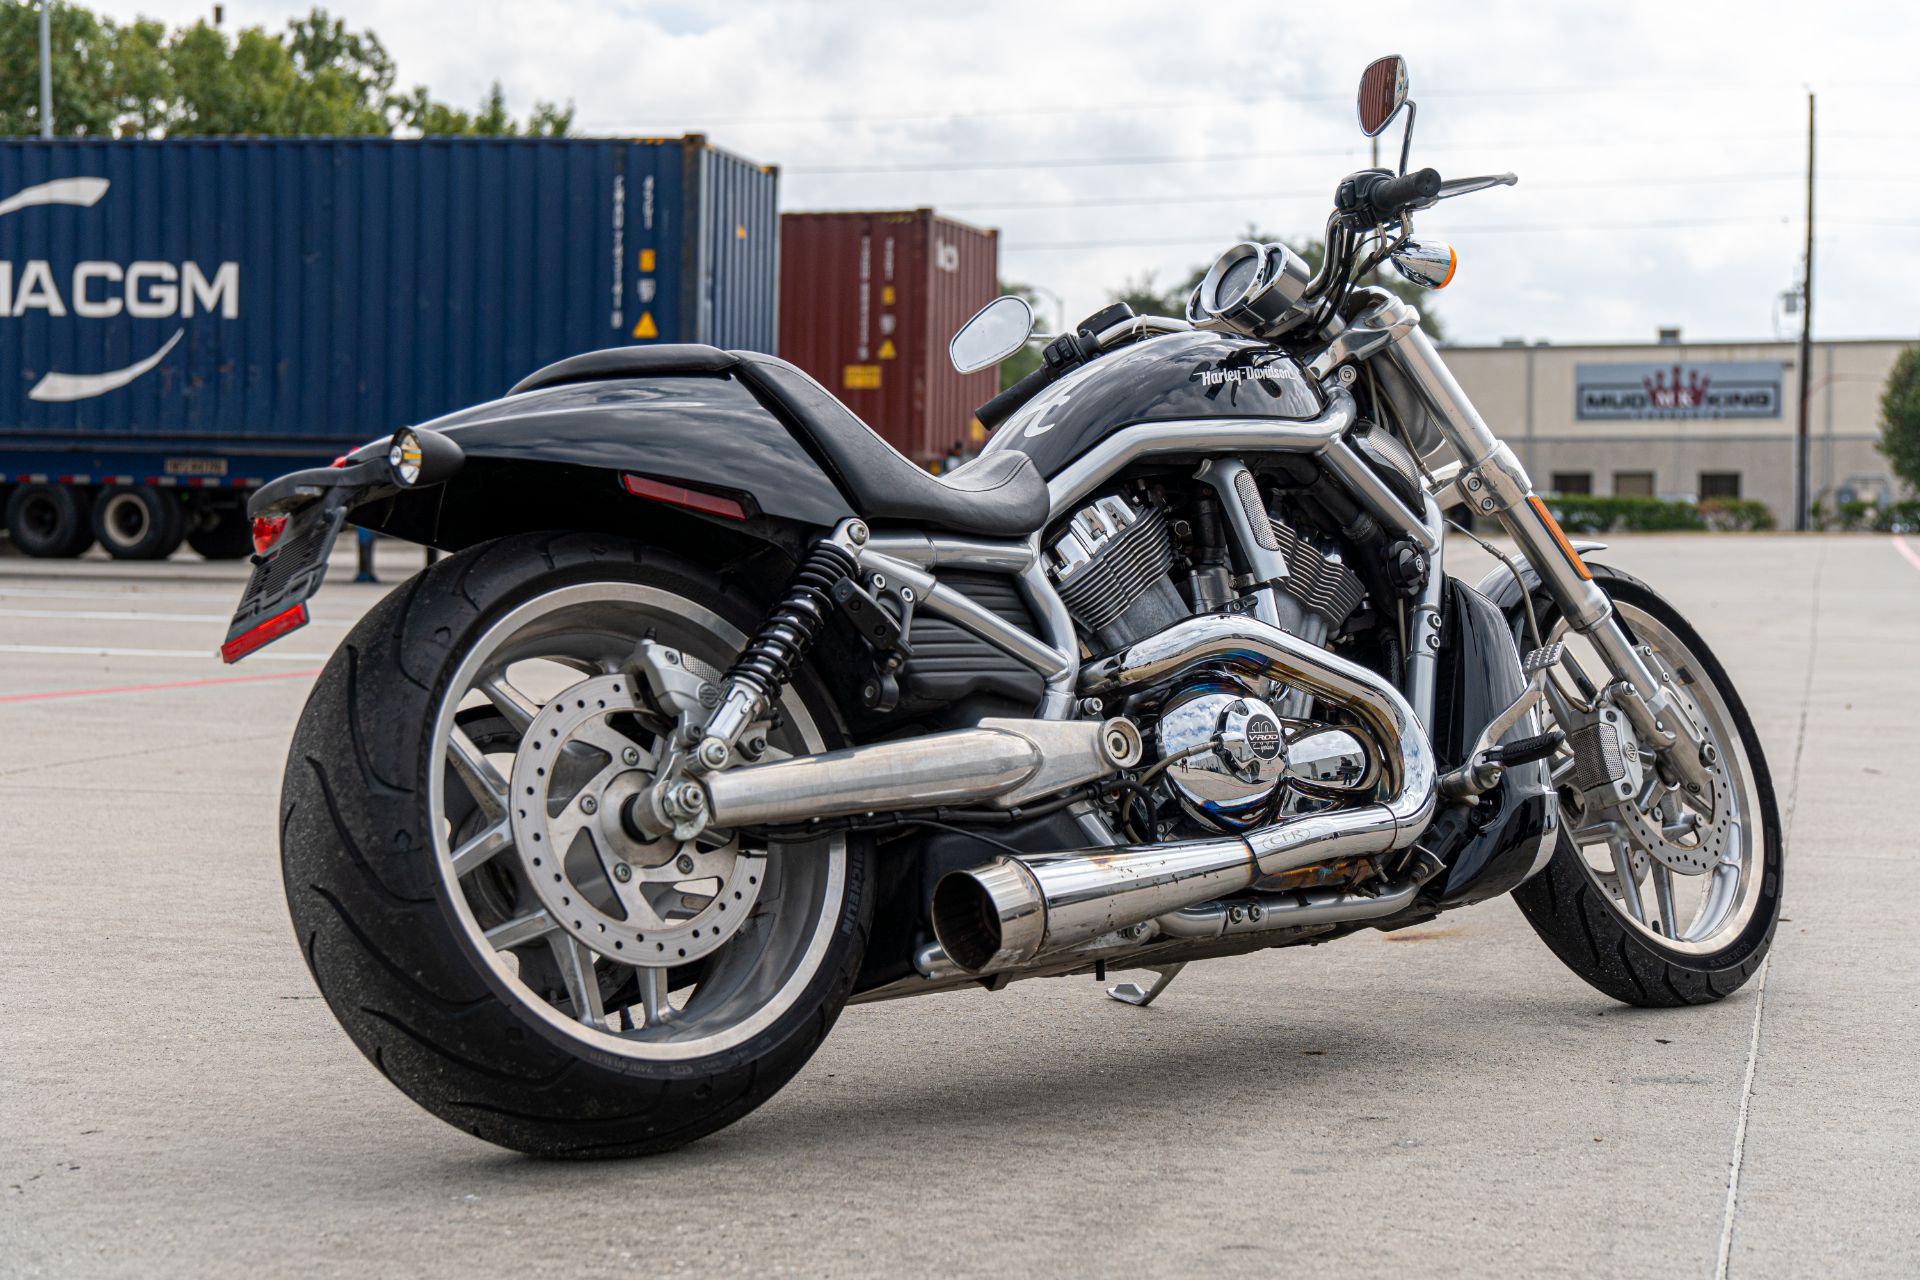 2012 Harley-Davidson V-Rod® 10th Anniversary Edition in Houston, Texas - Photo 3